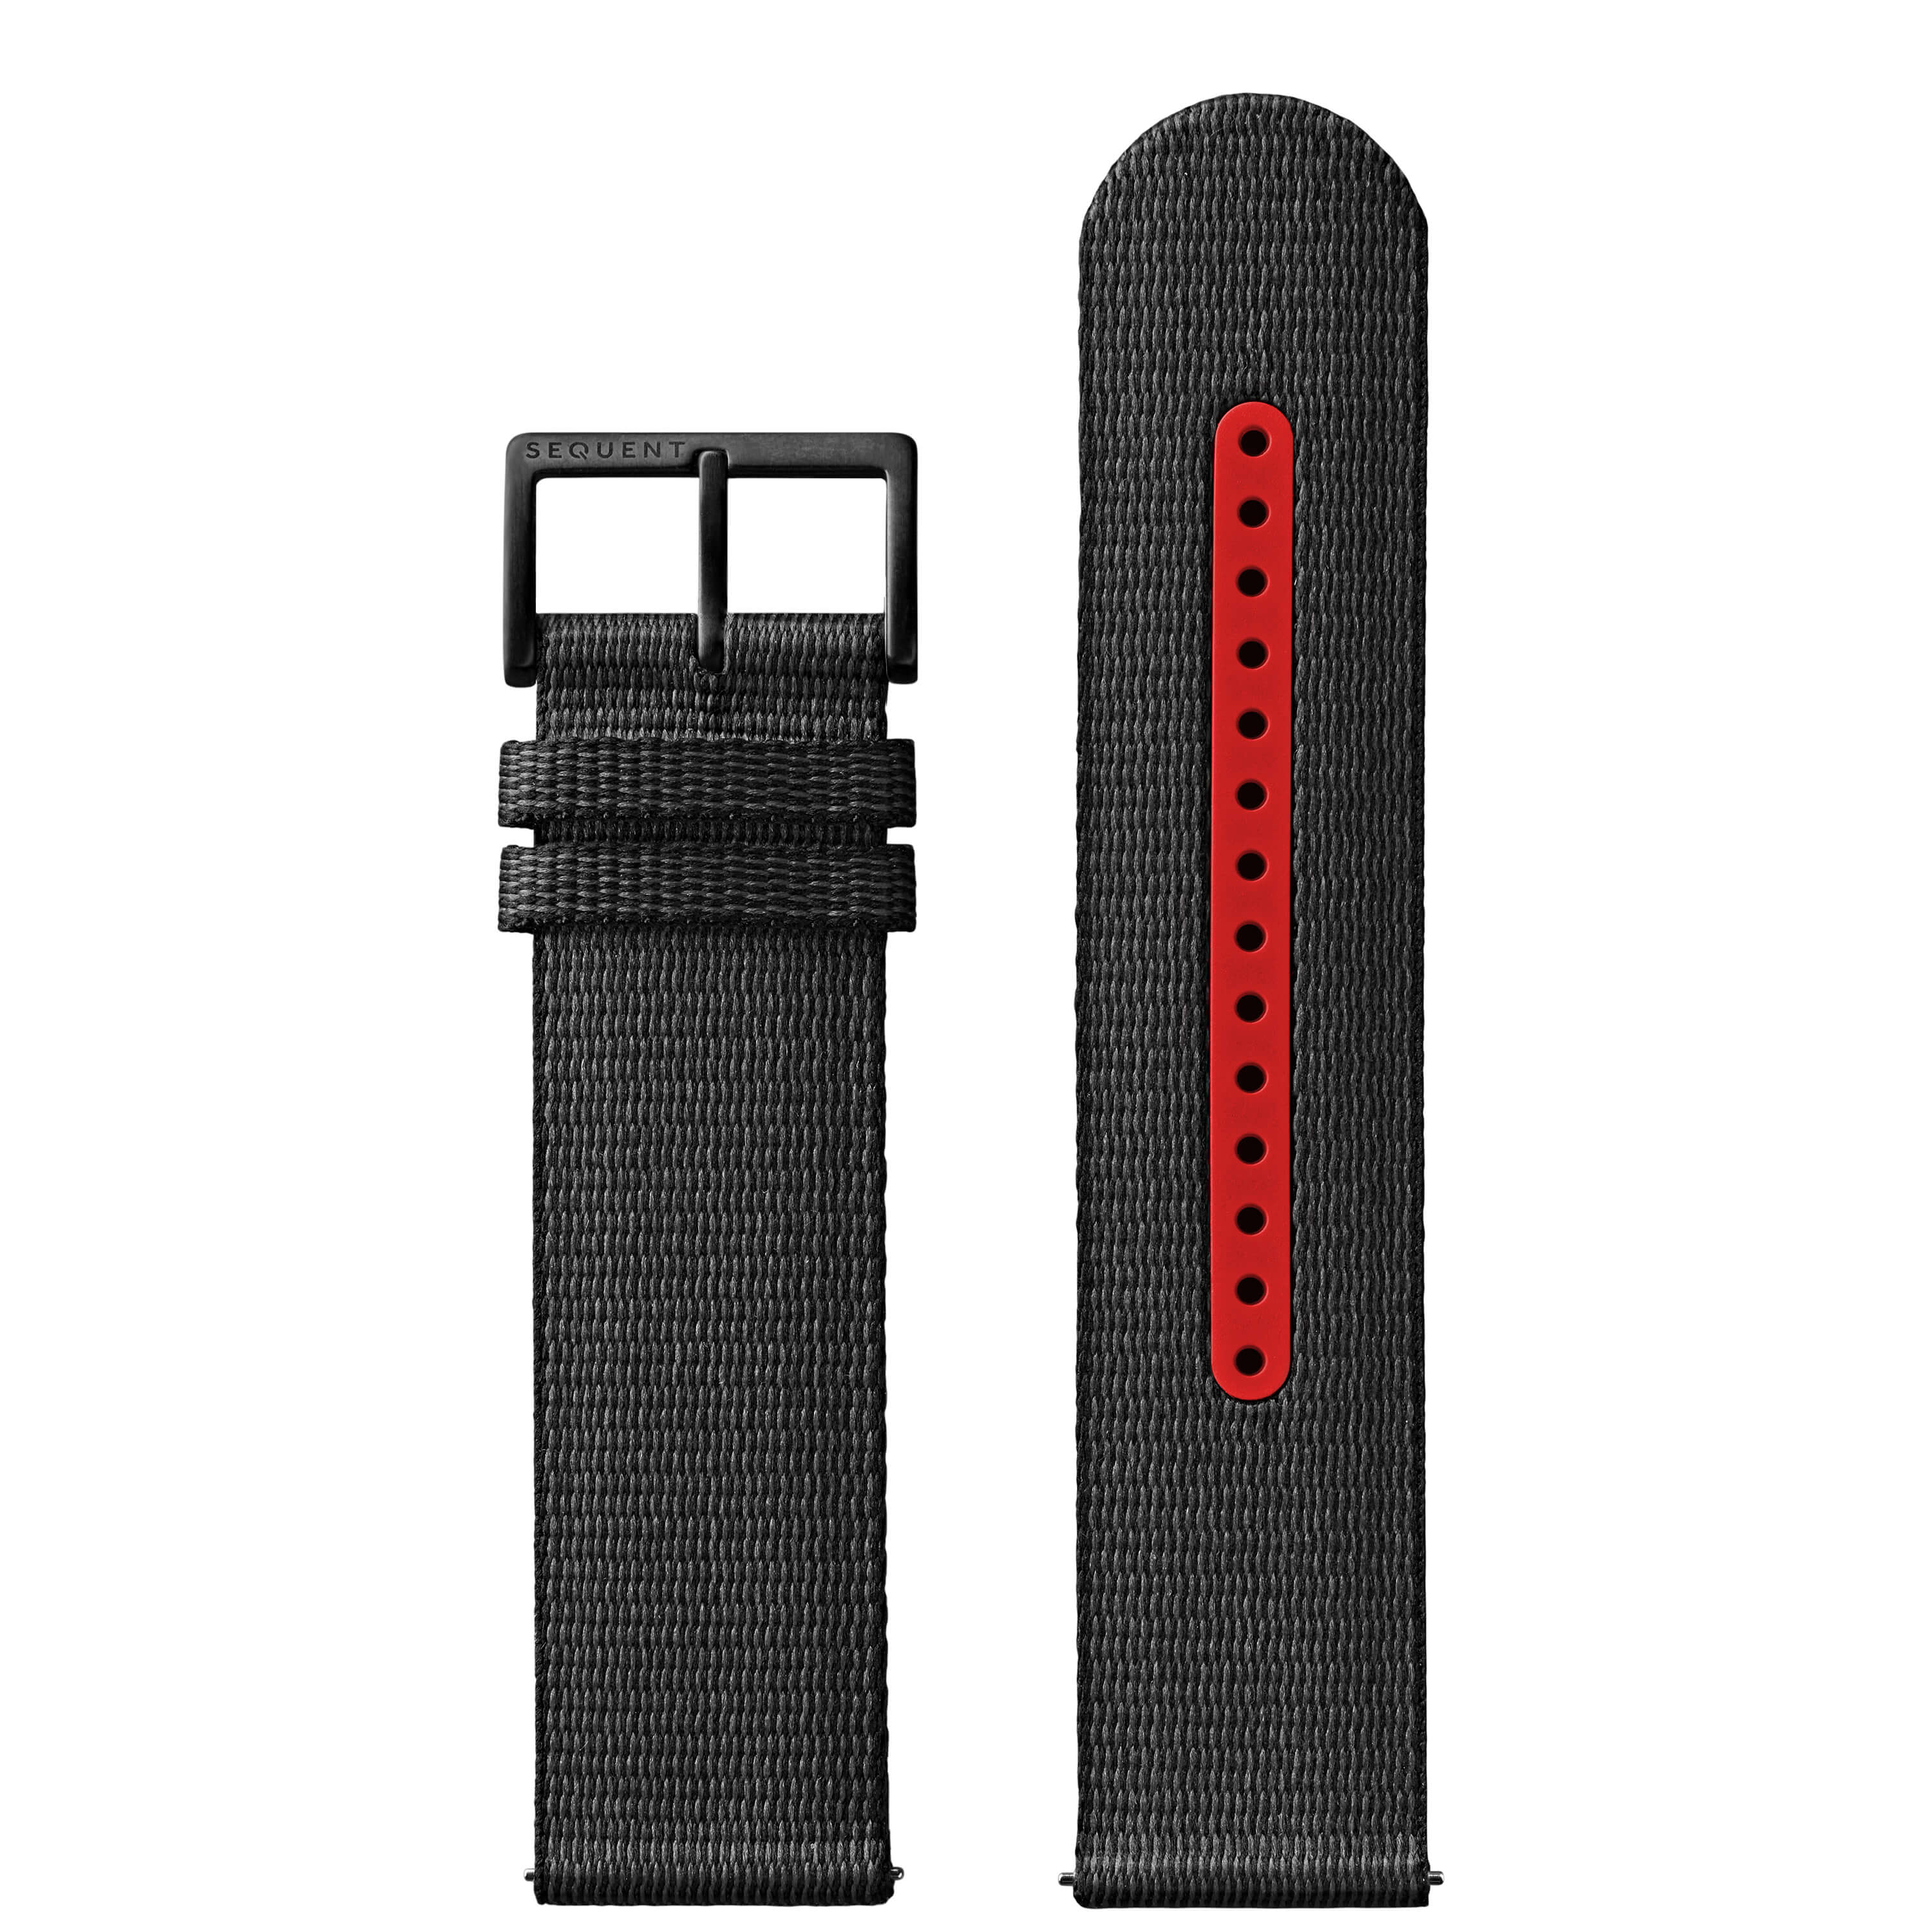 22mm - Black/Red #tide textile strap - Black Titanium buckle